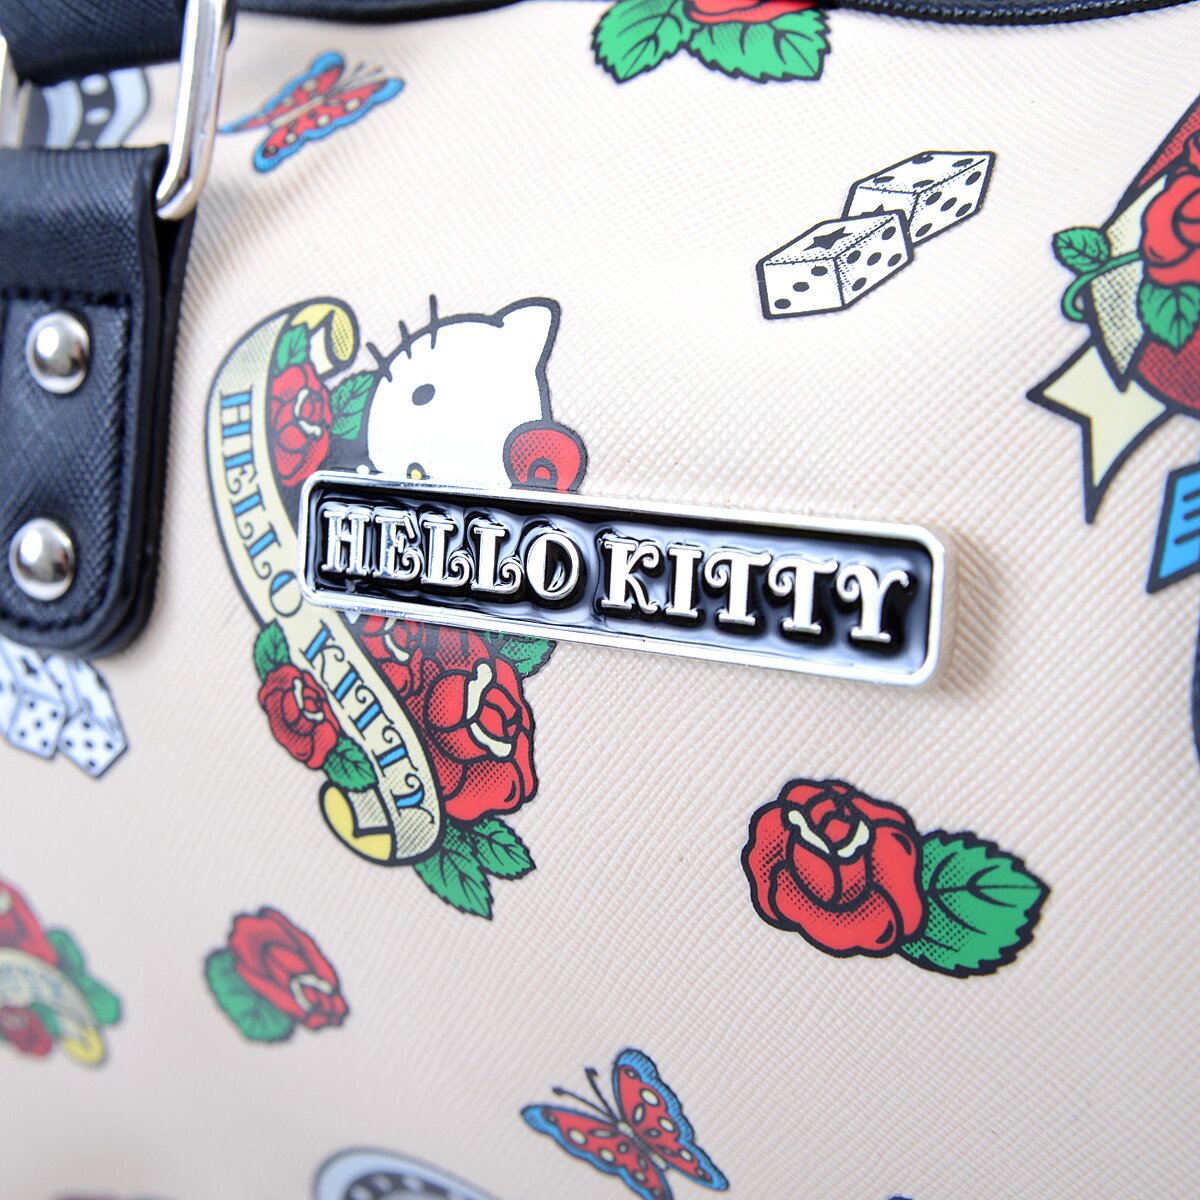 Hello Kitty Berry Embossed Pattern Handbag: Sanrio - Tokyo Otaku Mode (TOM)